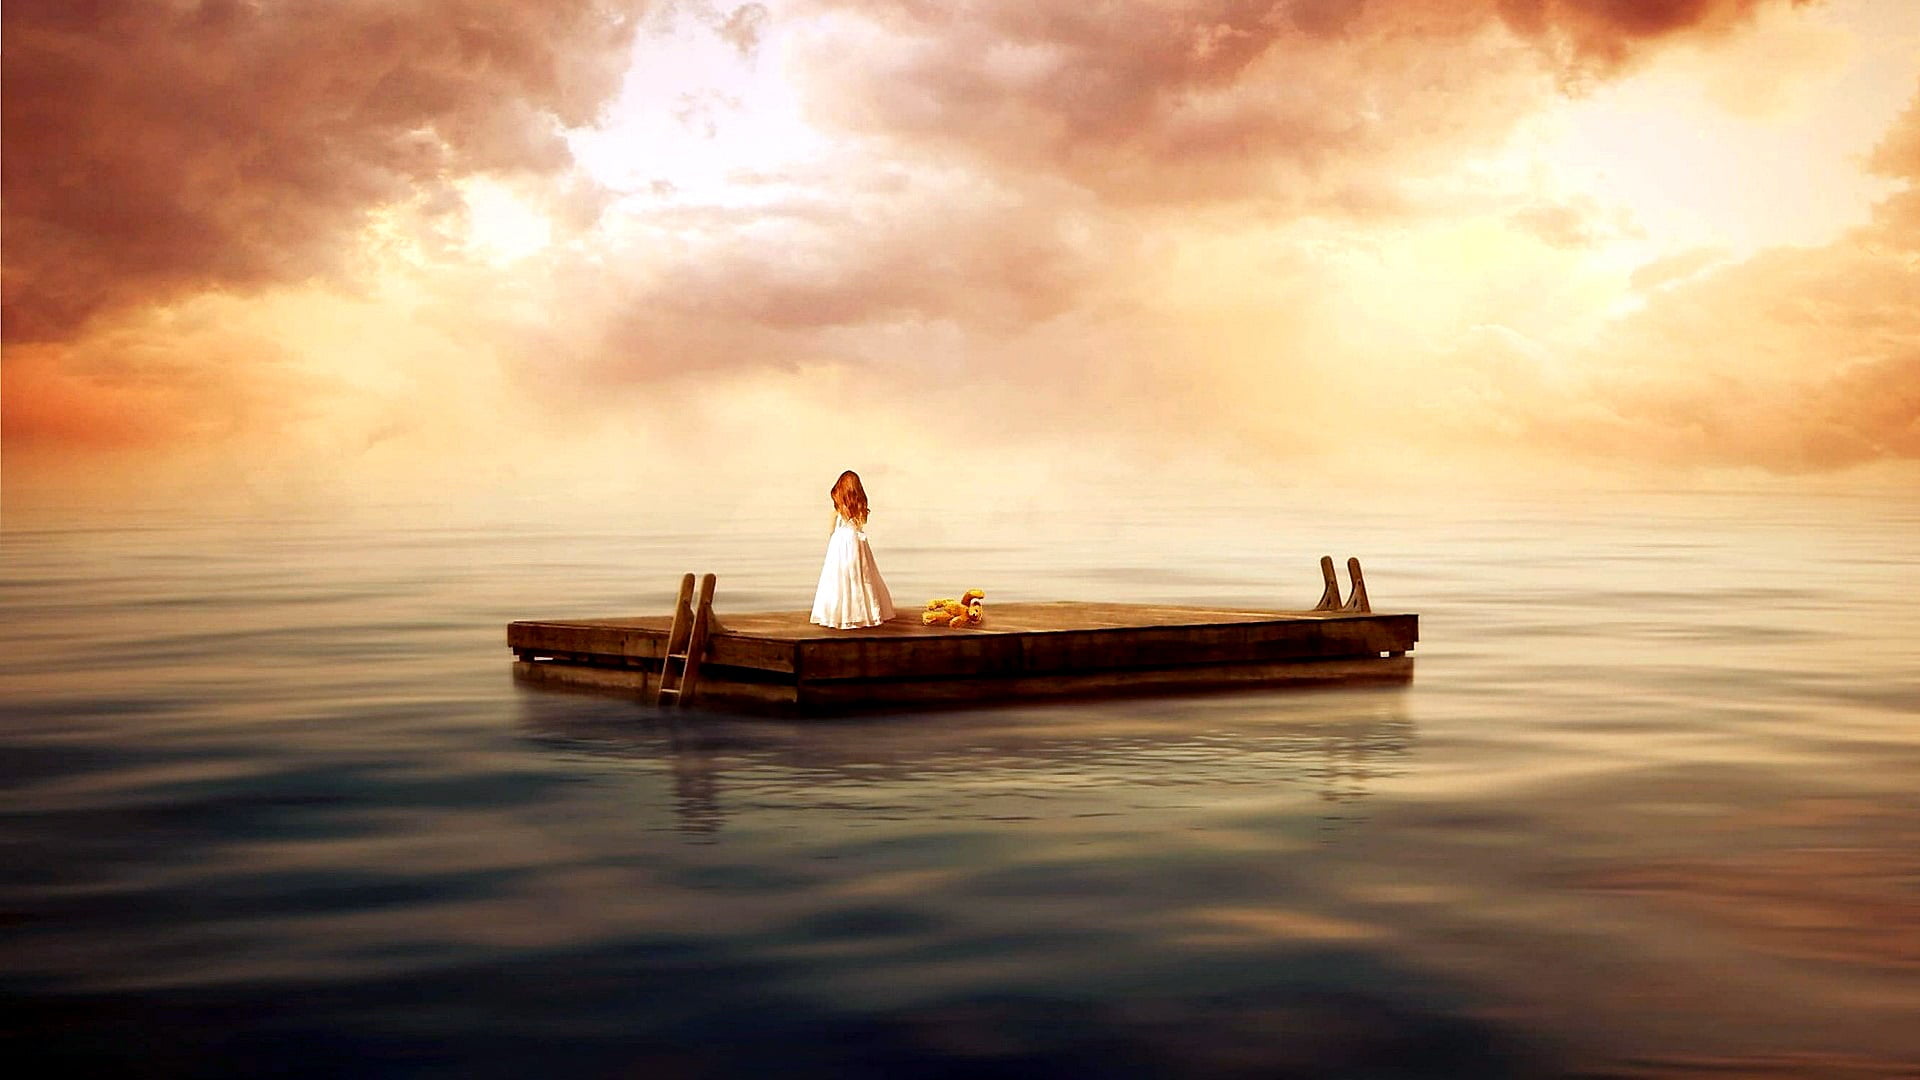 raft, little girl, fantasy art, alone, lost, nightmare, nautical vessel